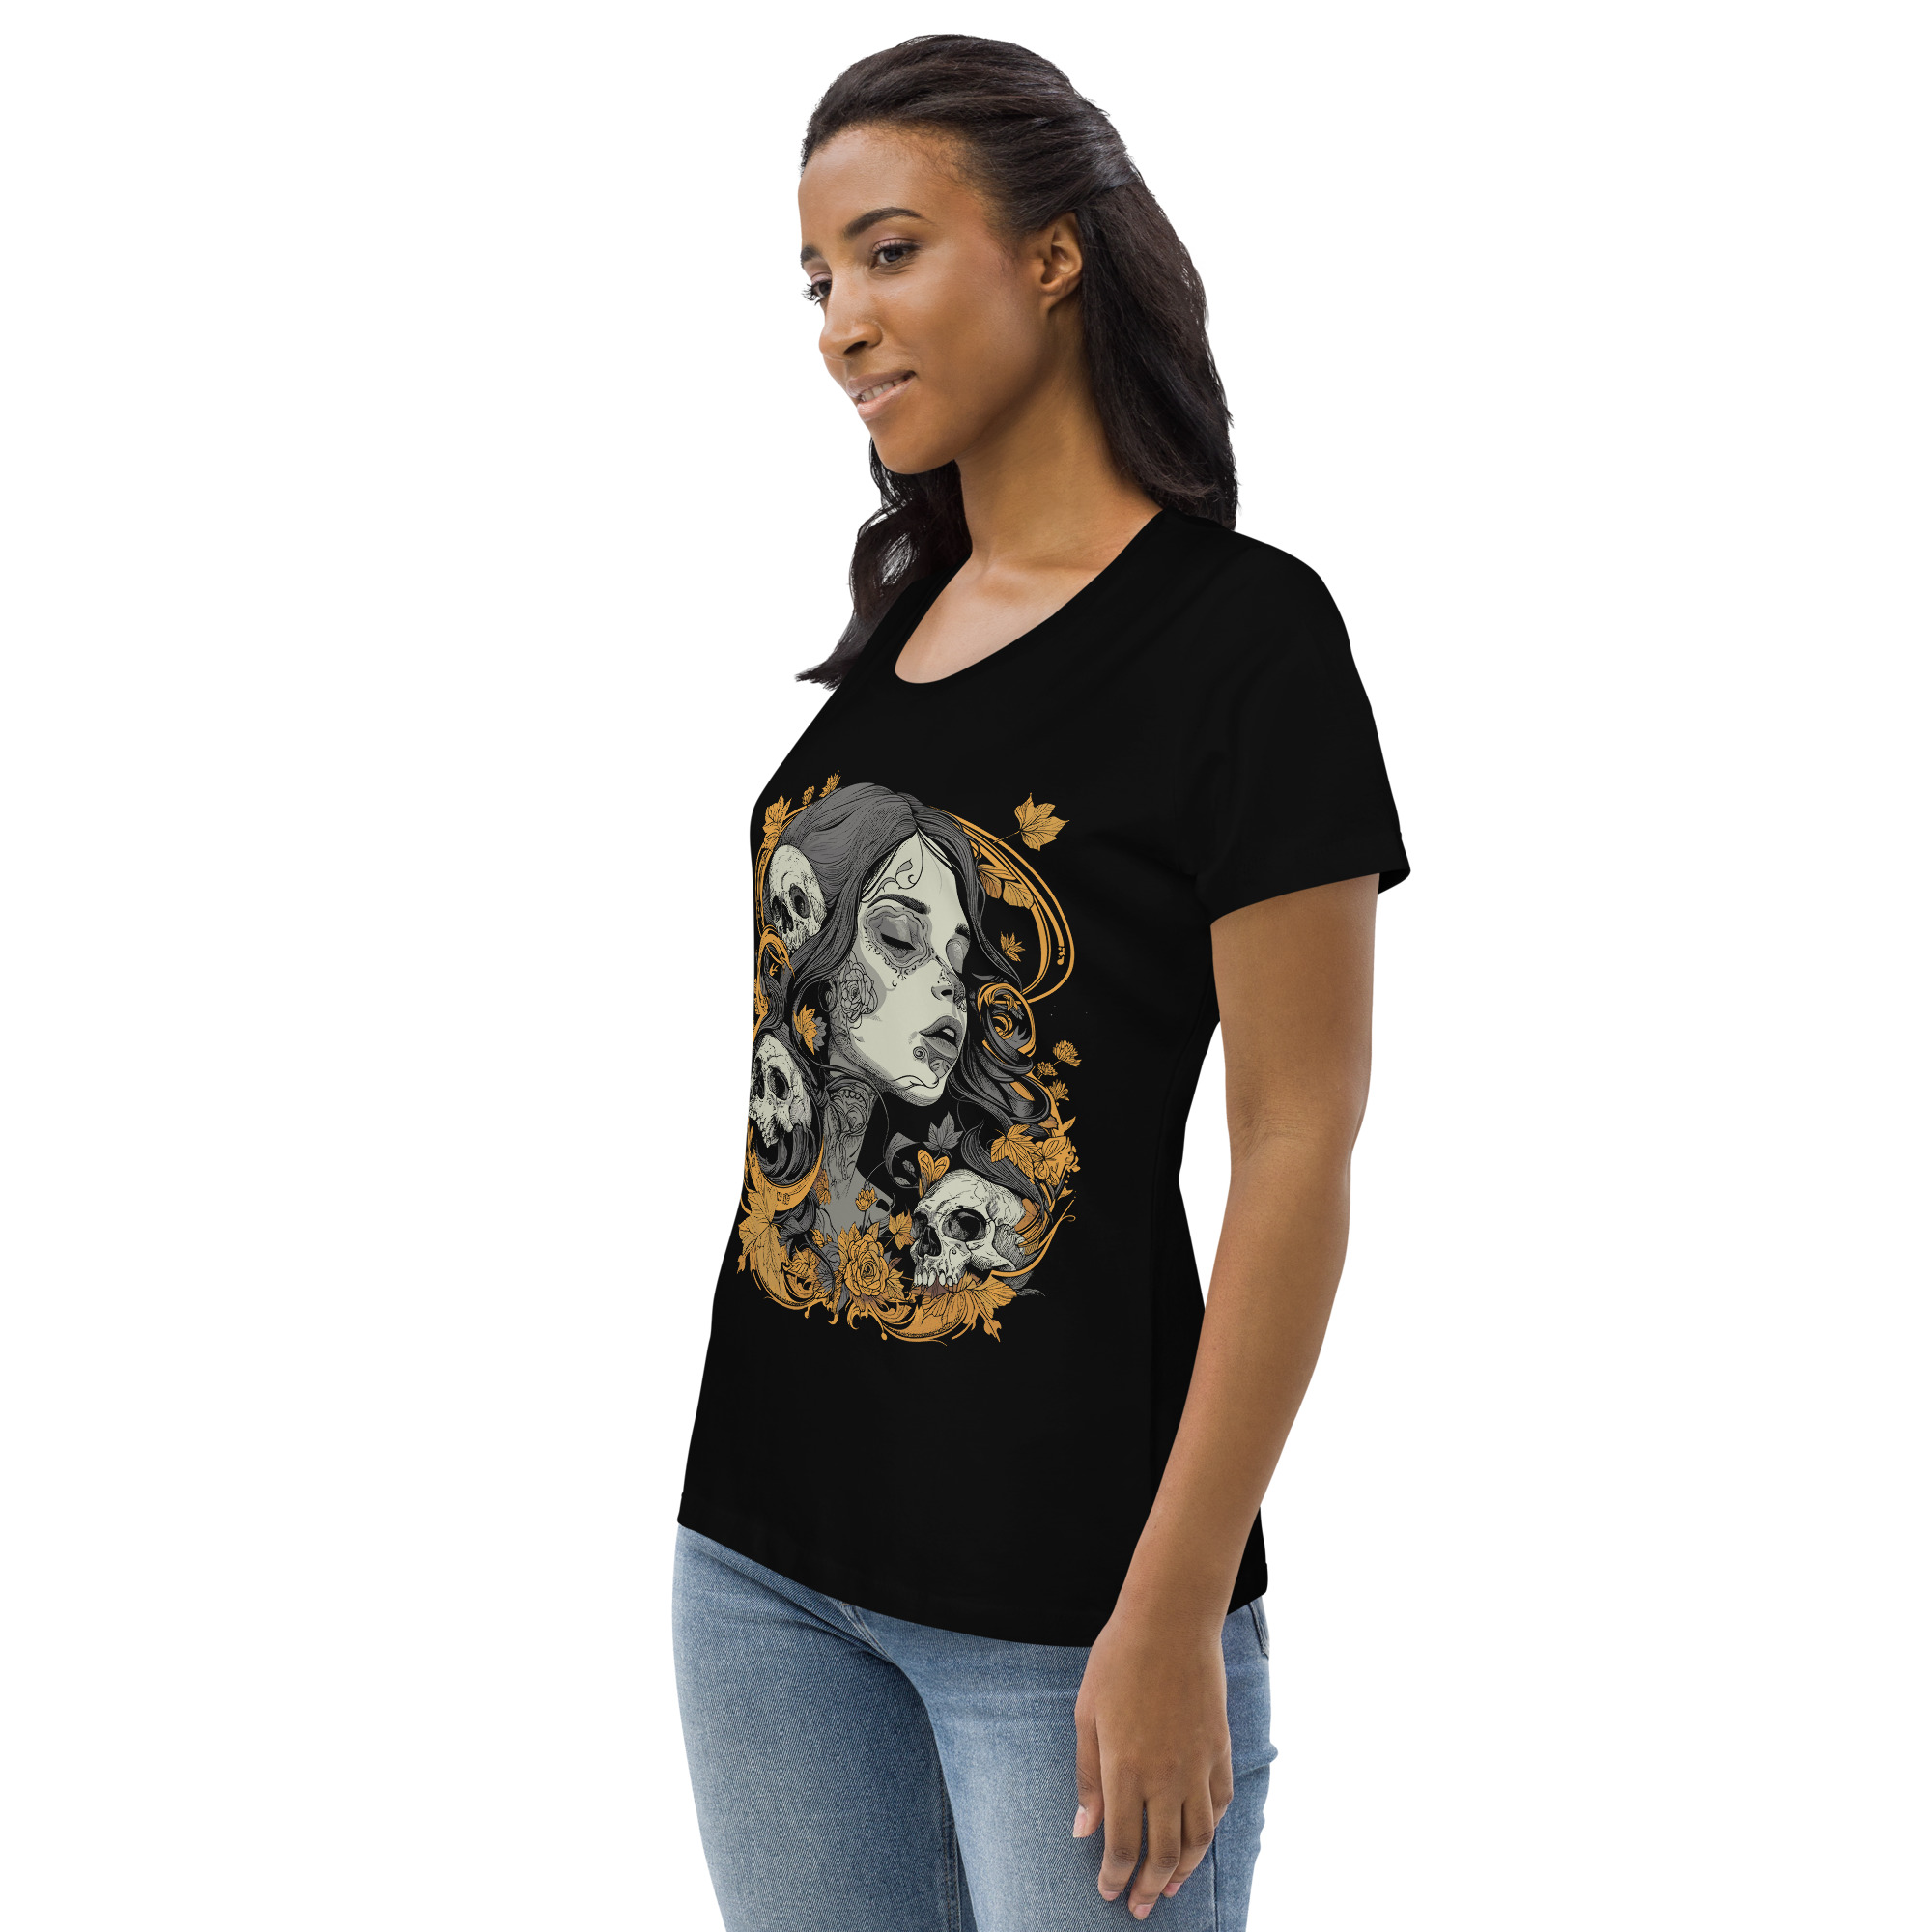 Women’s T-shirt – Dark Beauty – Baroque Black T-shirts Wearyt